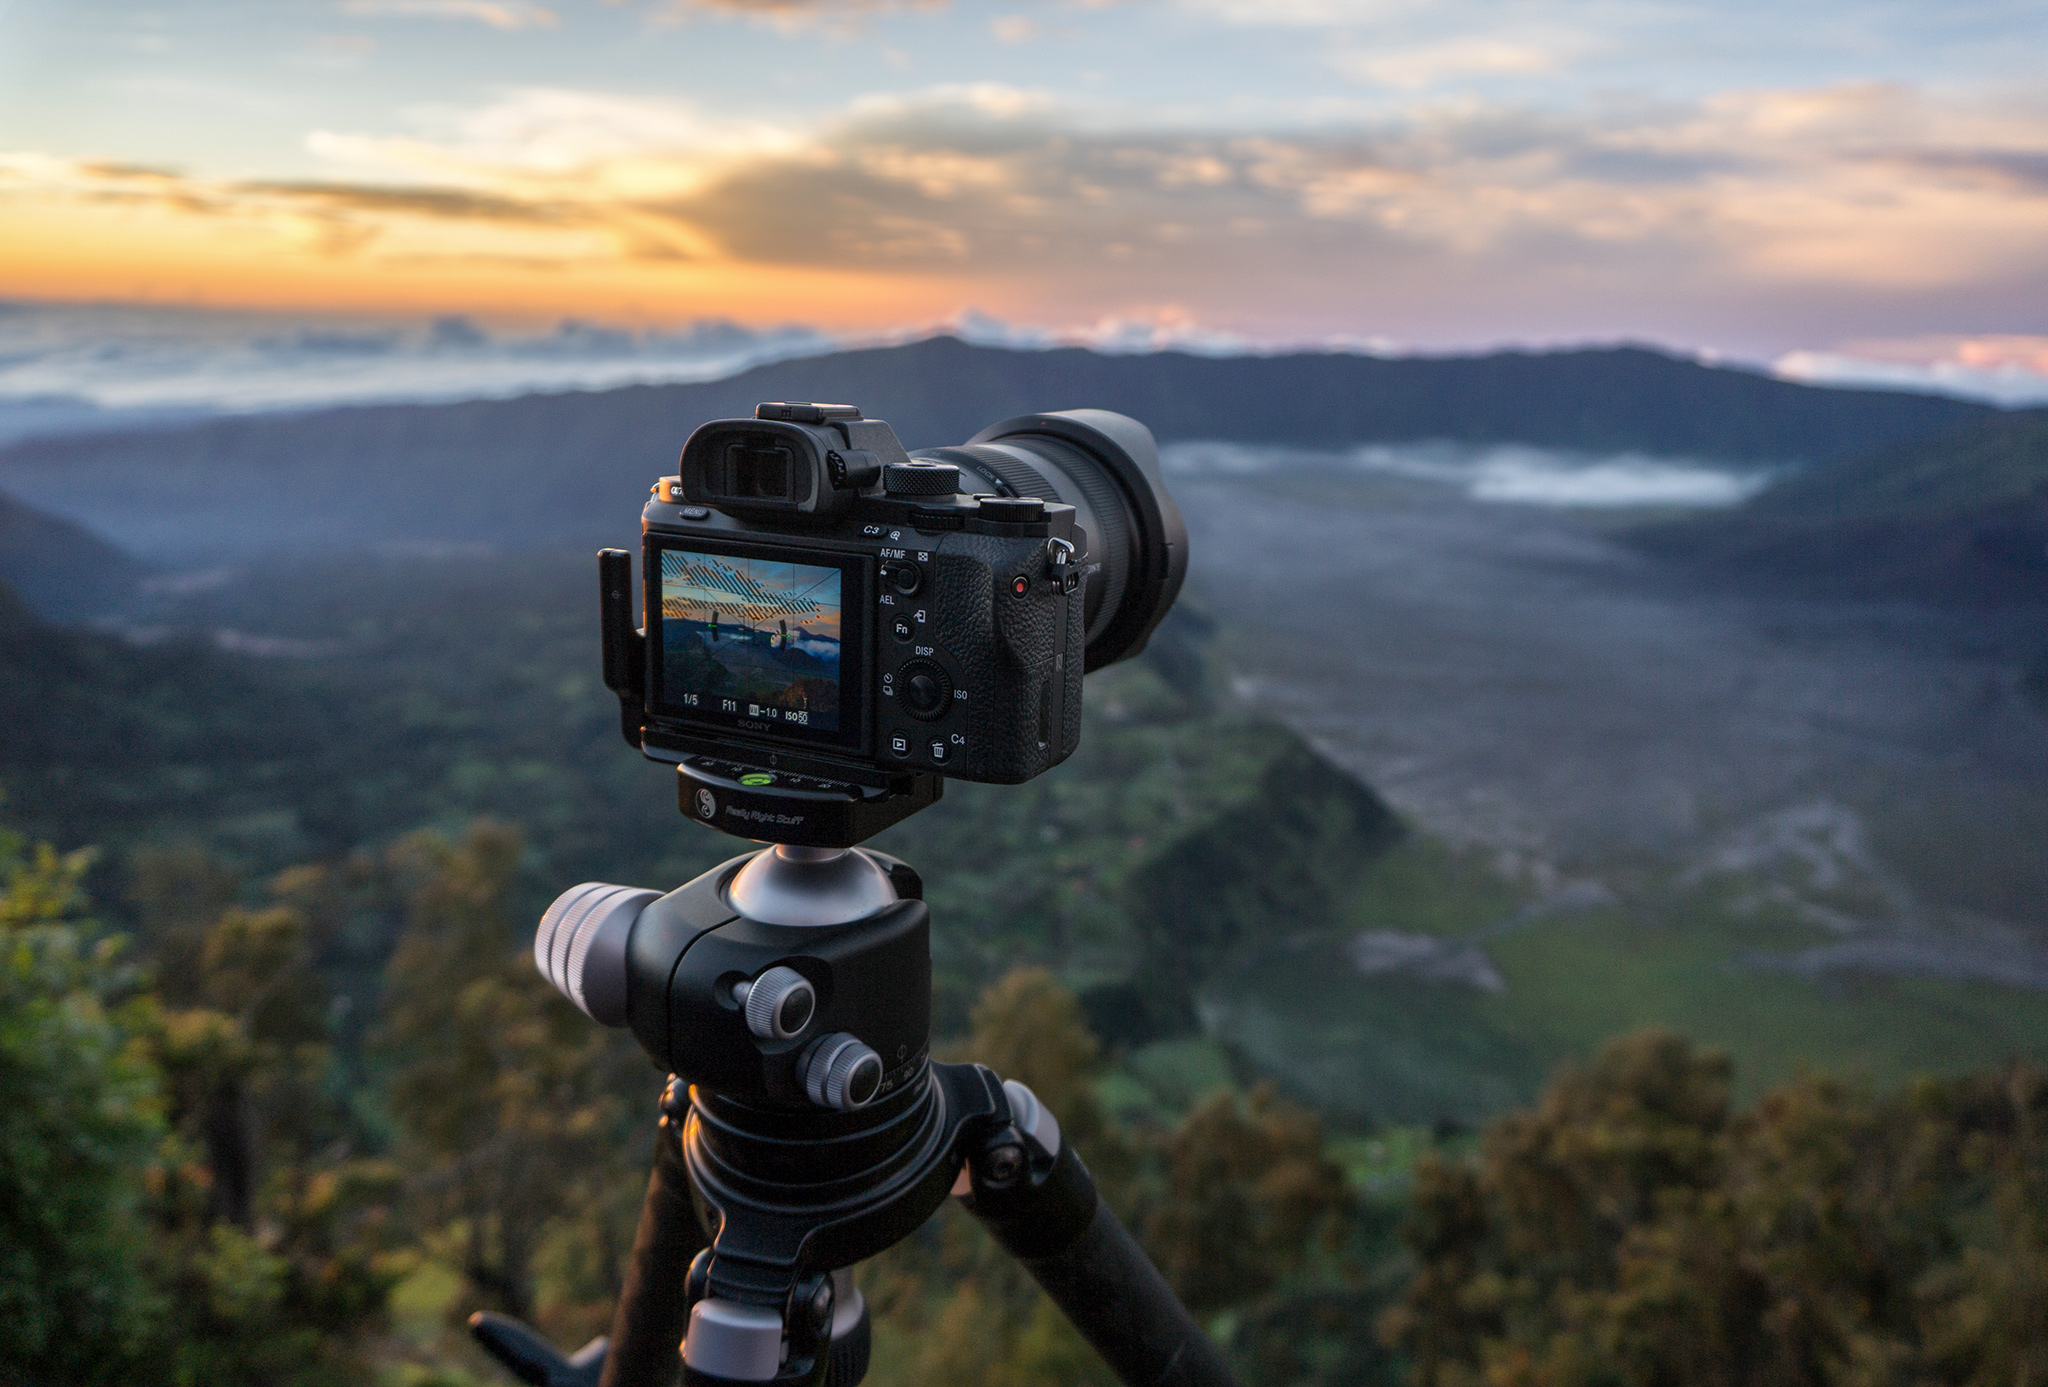 Sony A7RII – A Dynamic Range Beast for Landscape Photographer